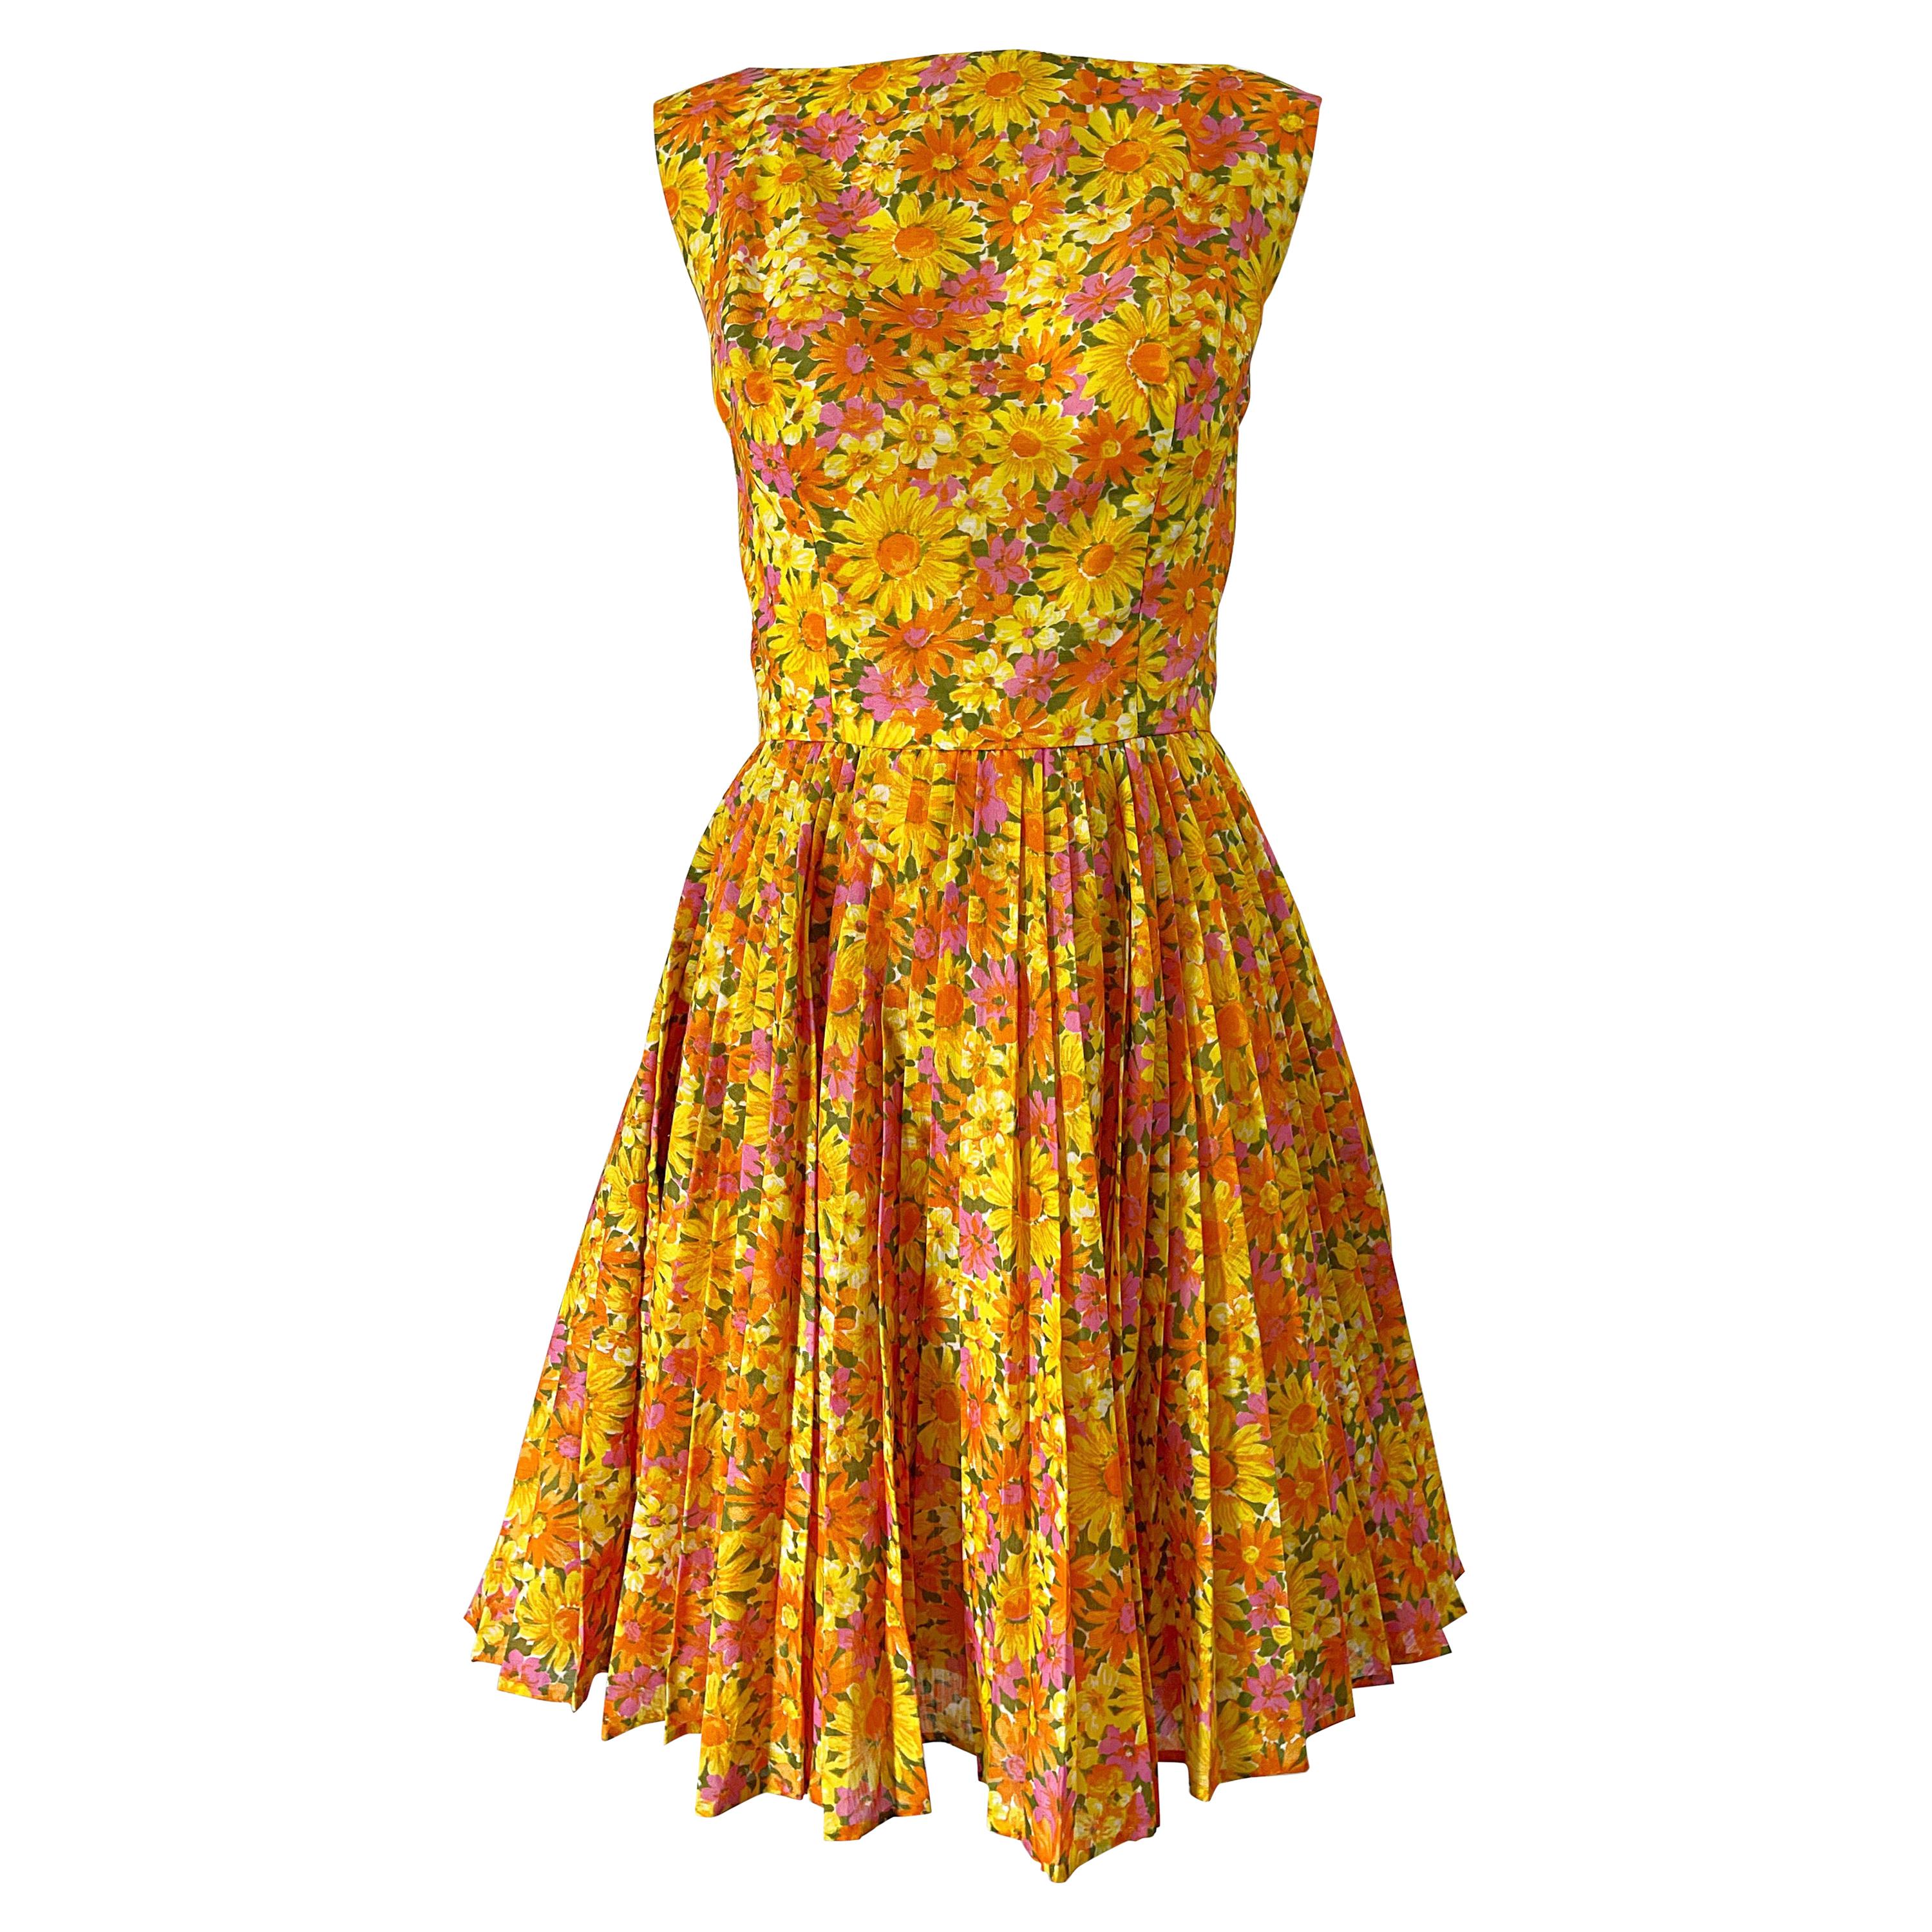 1950s Suzy Perette Yellow Pink Orange Daisy Print Cotton Vintage 50s Dress For Sale